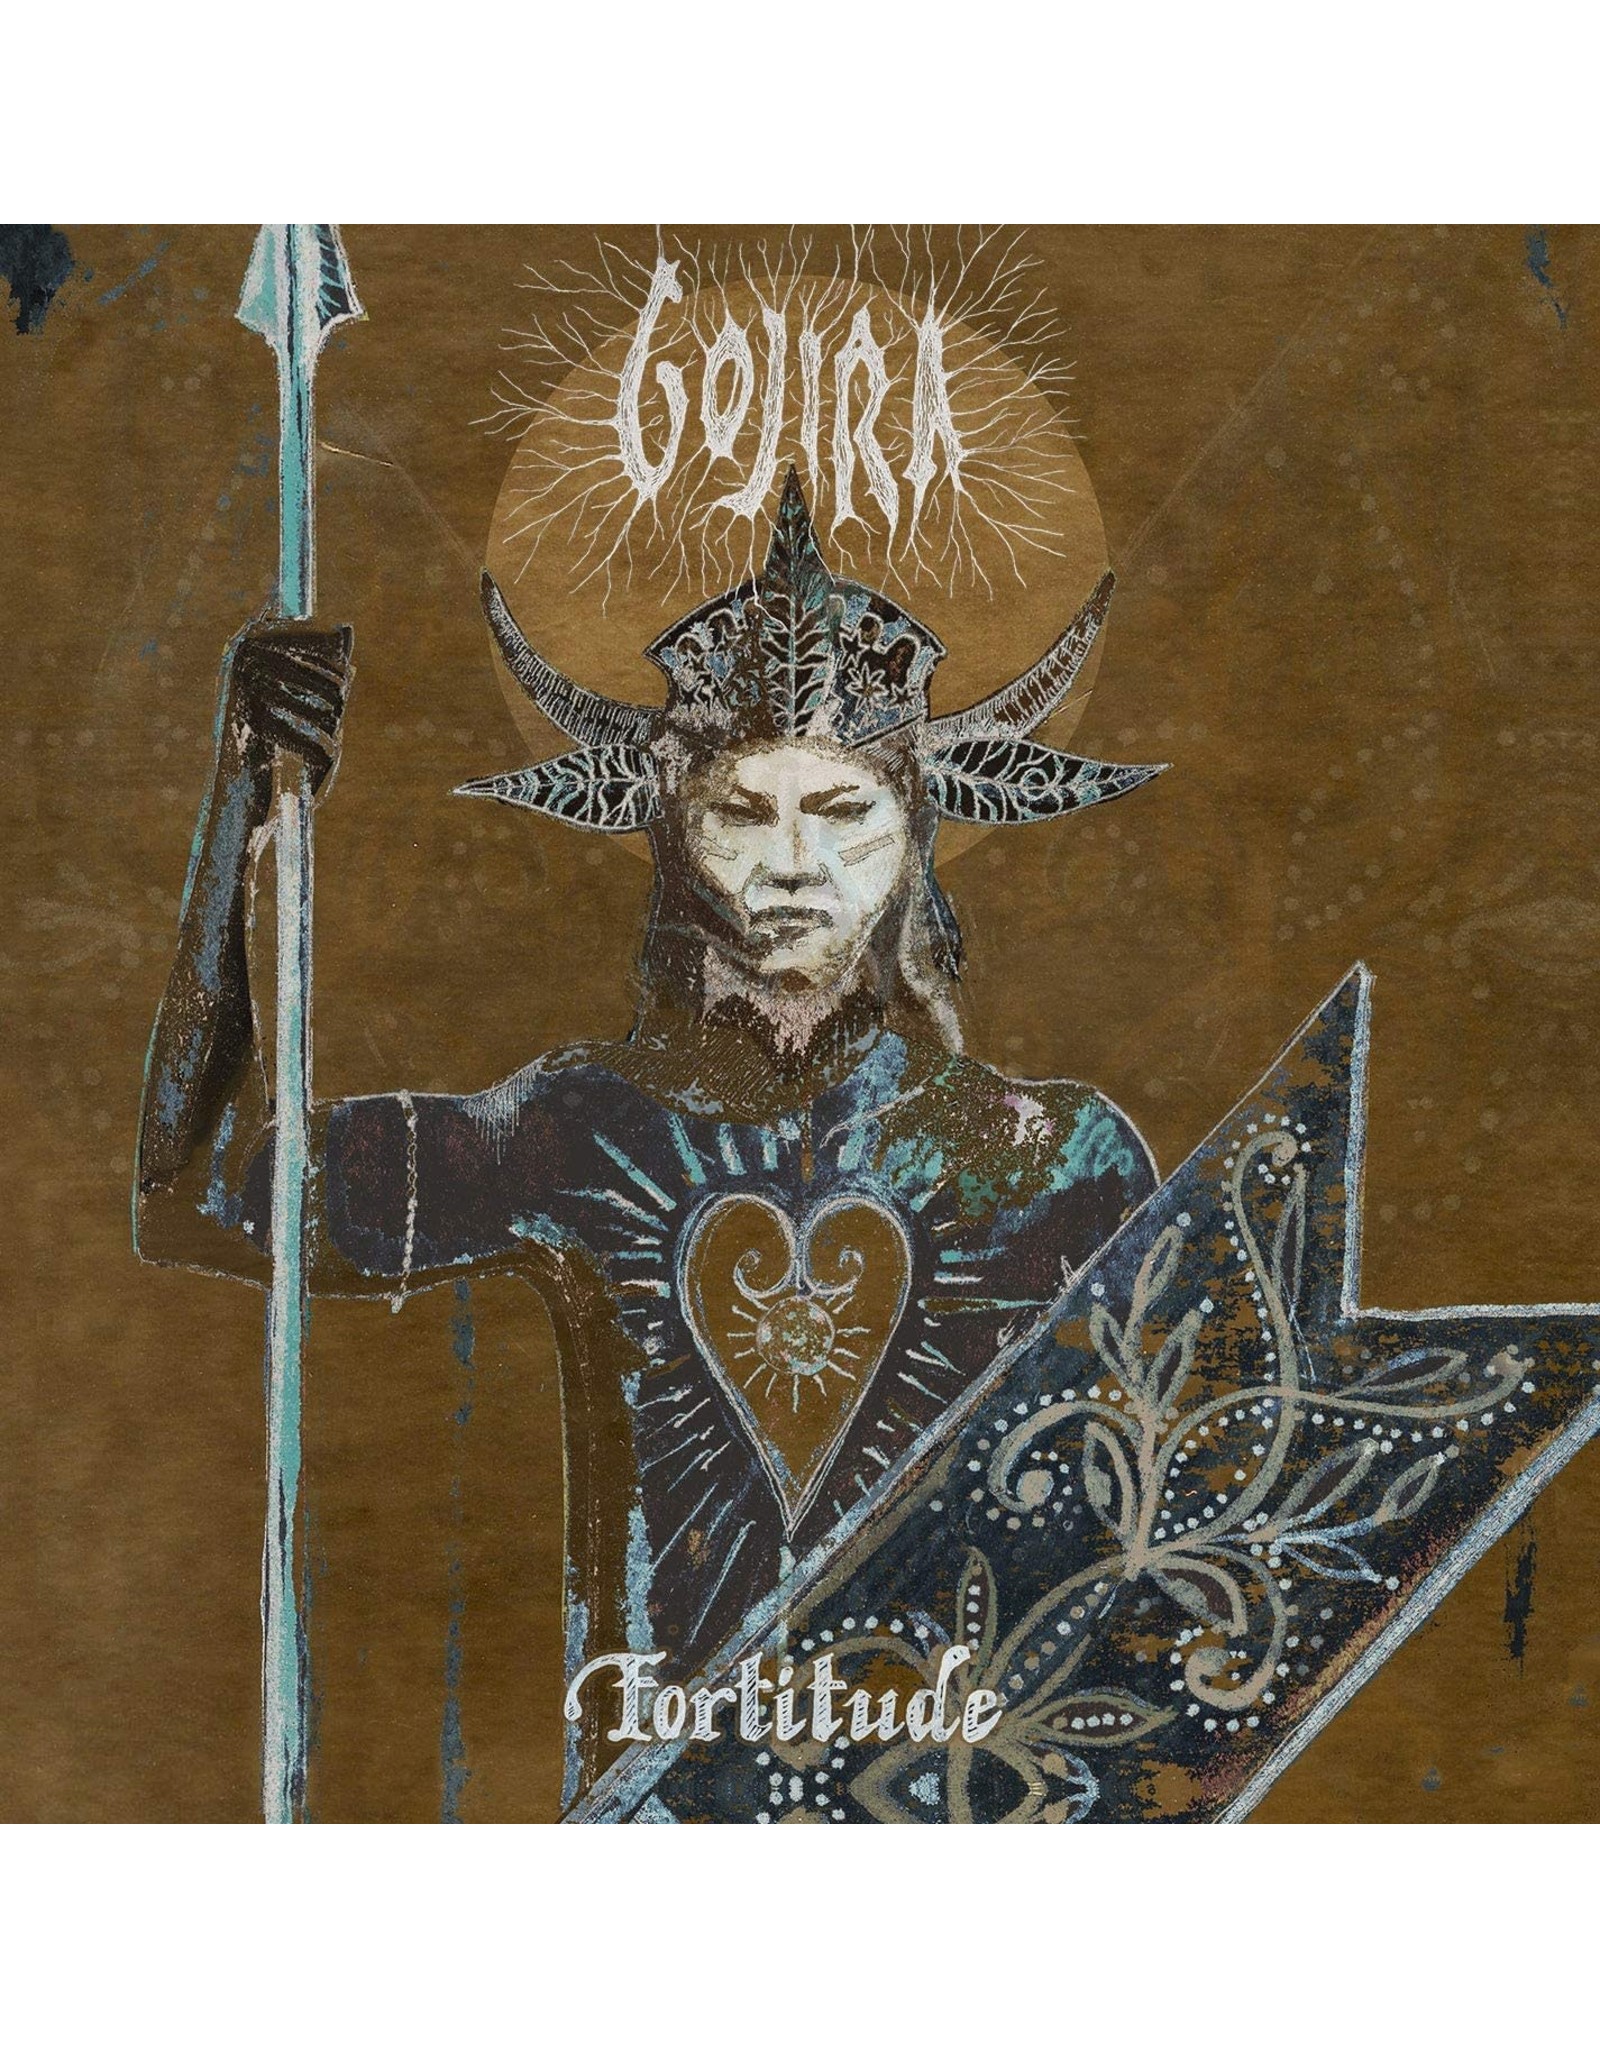 Gojira - Fortitude